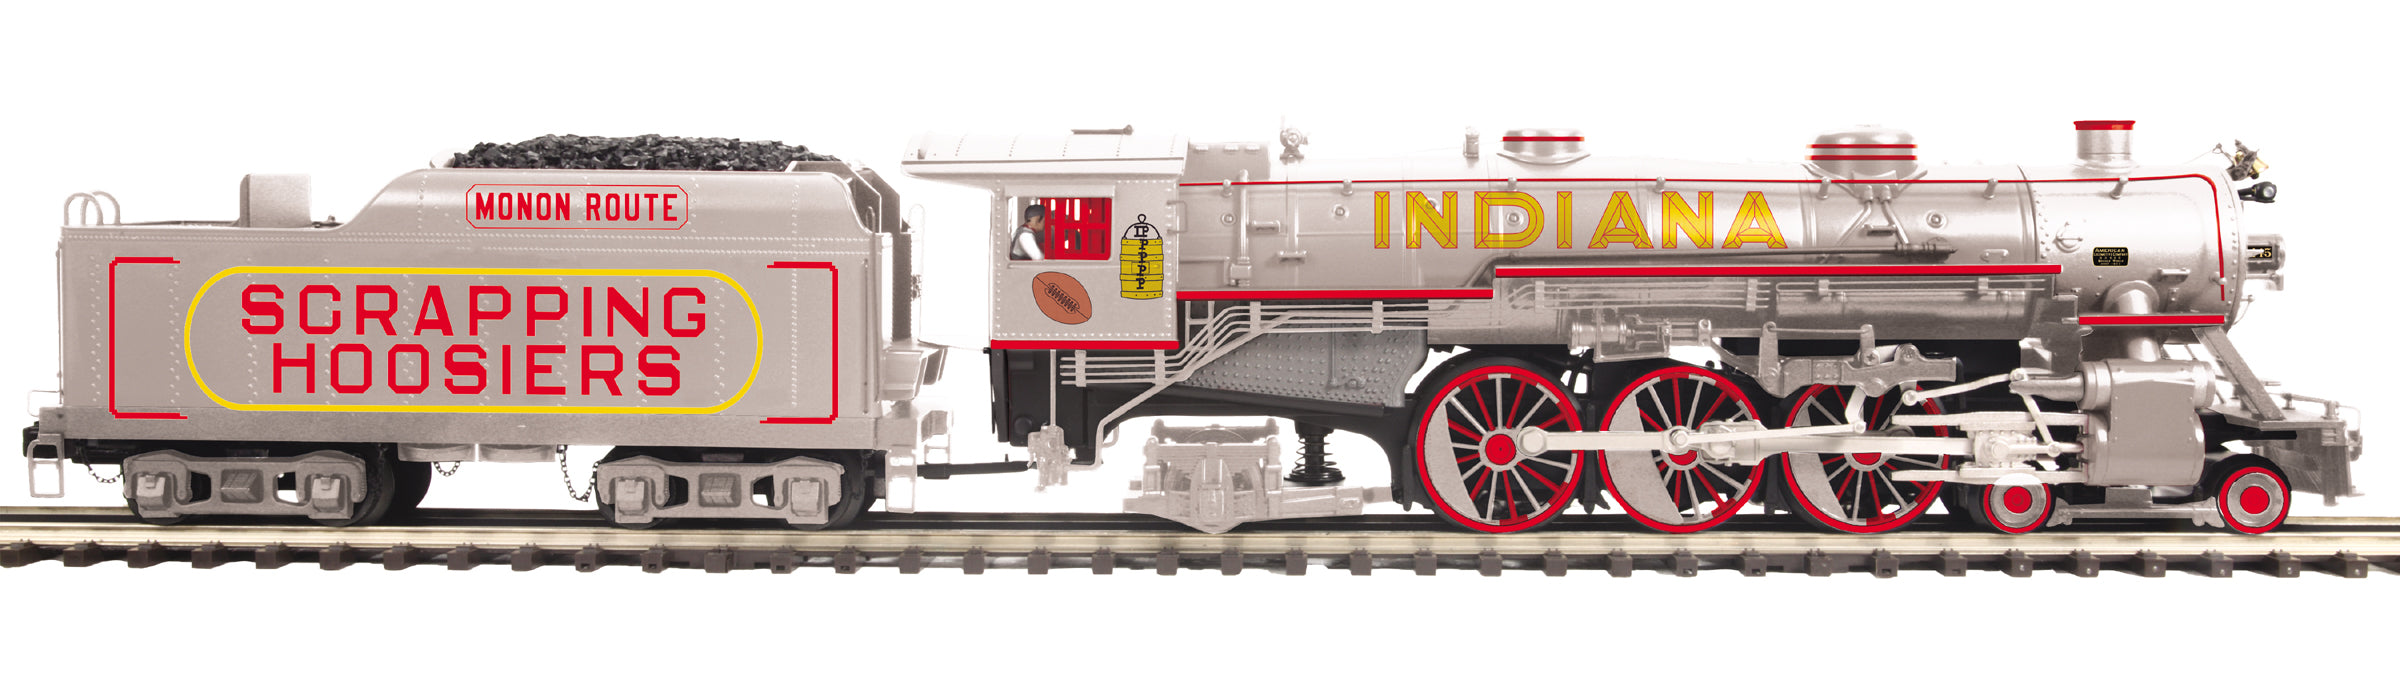 MTH 20-3809-1 - 4-6-2 USRA Pacific Steam Engine "Monon" #445 w/ PS3 (Indiana University) - Custom Run for MrMuffin'sTrains